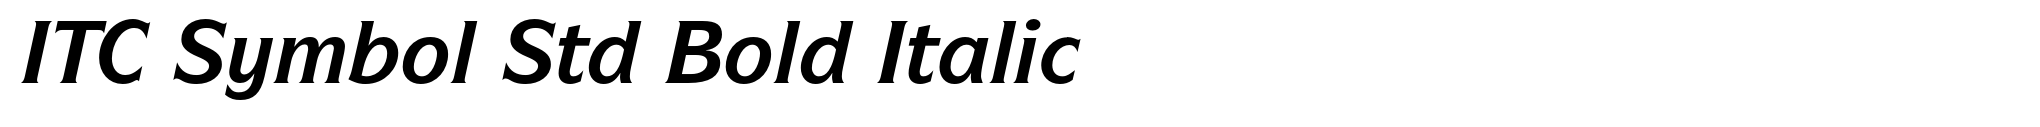 ITC Symbol Std Bold Italic image